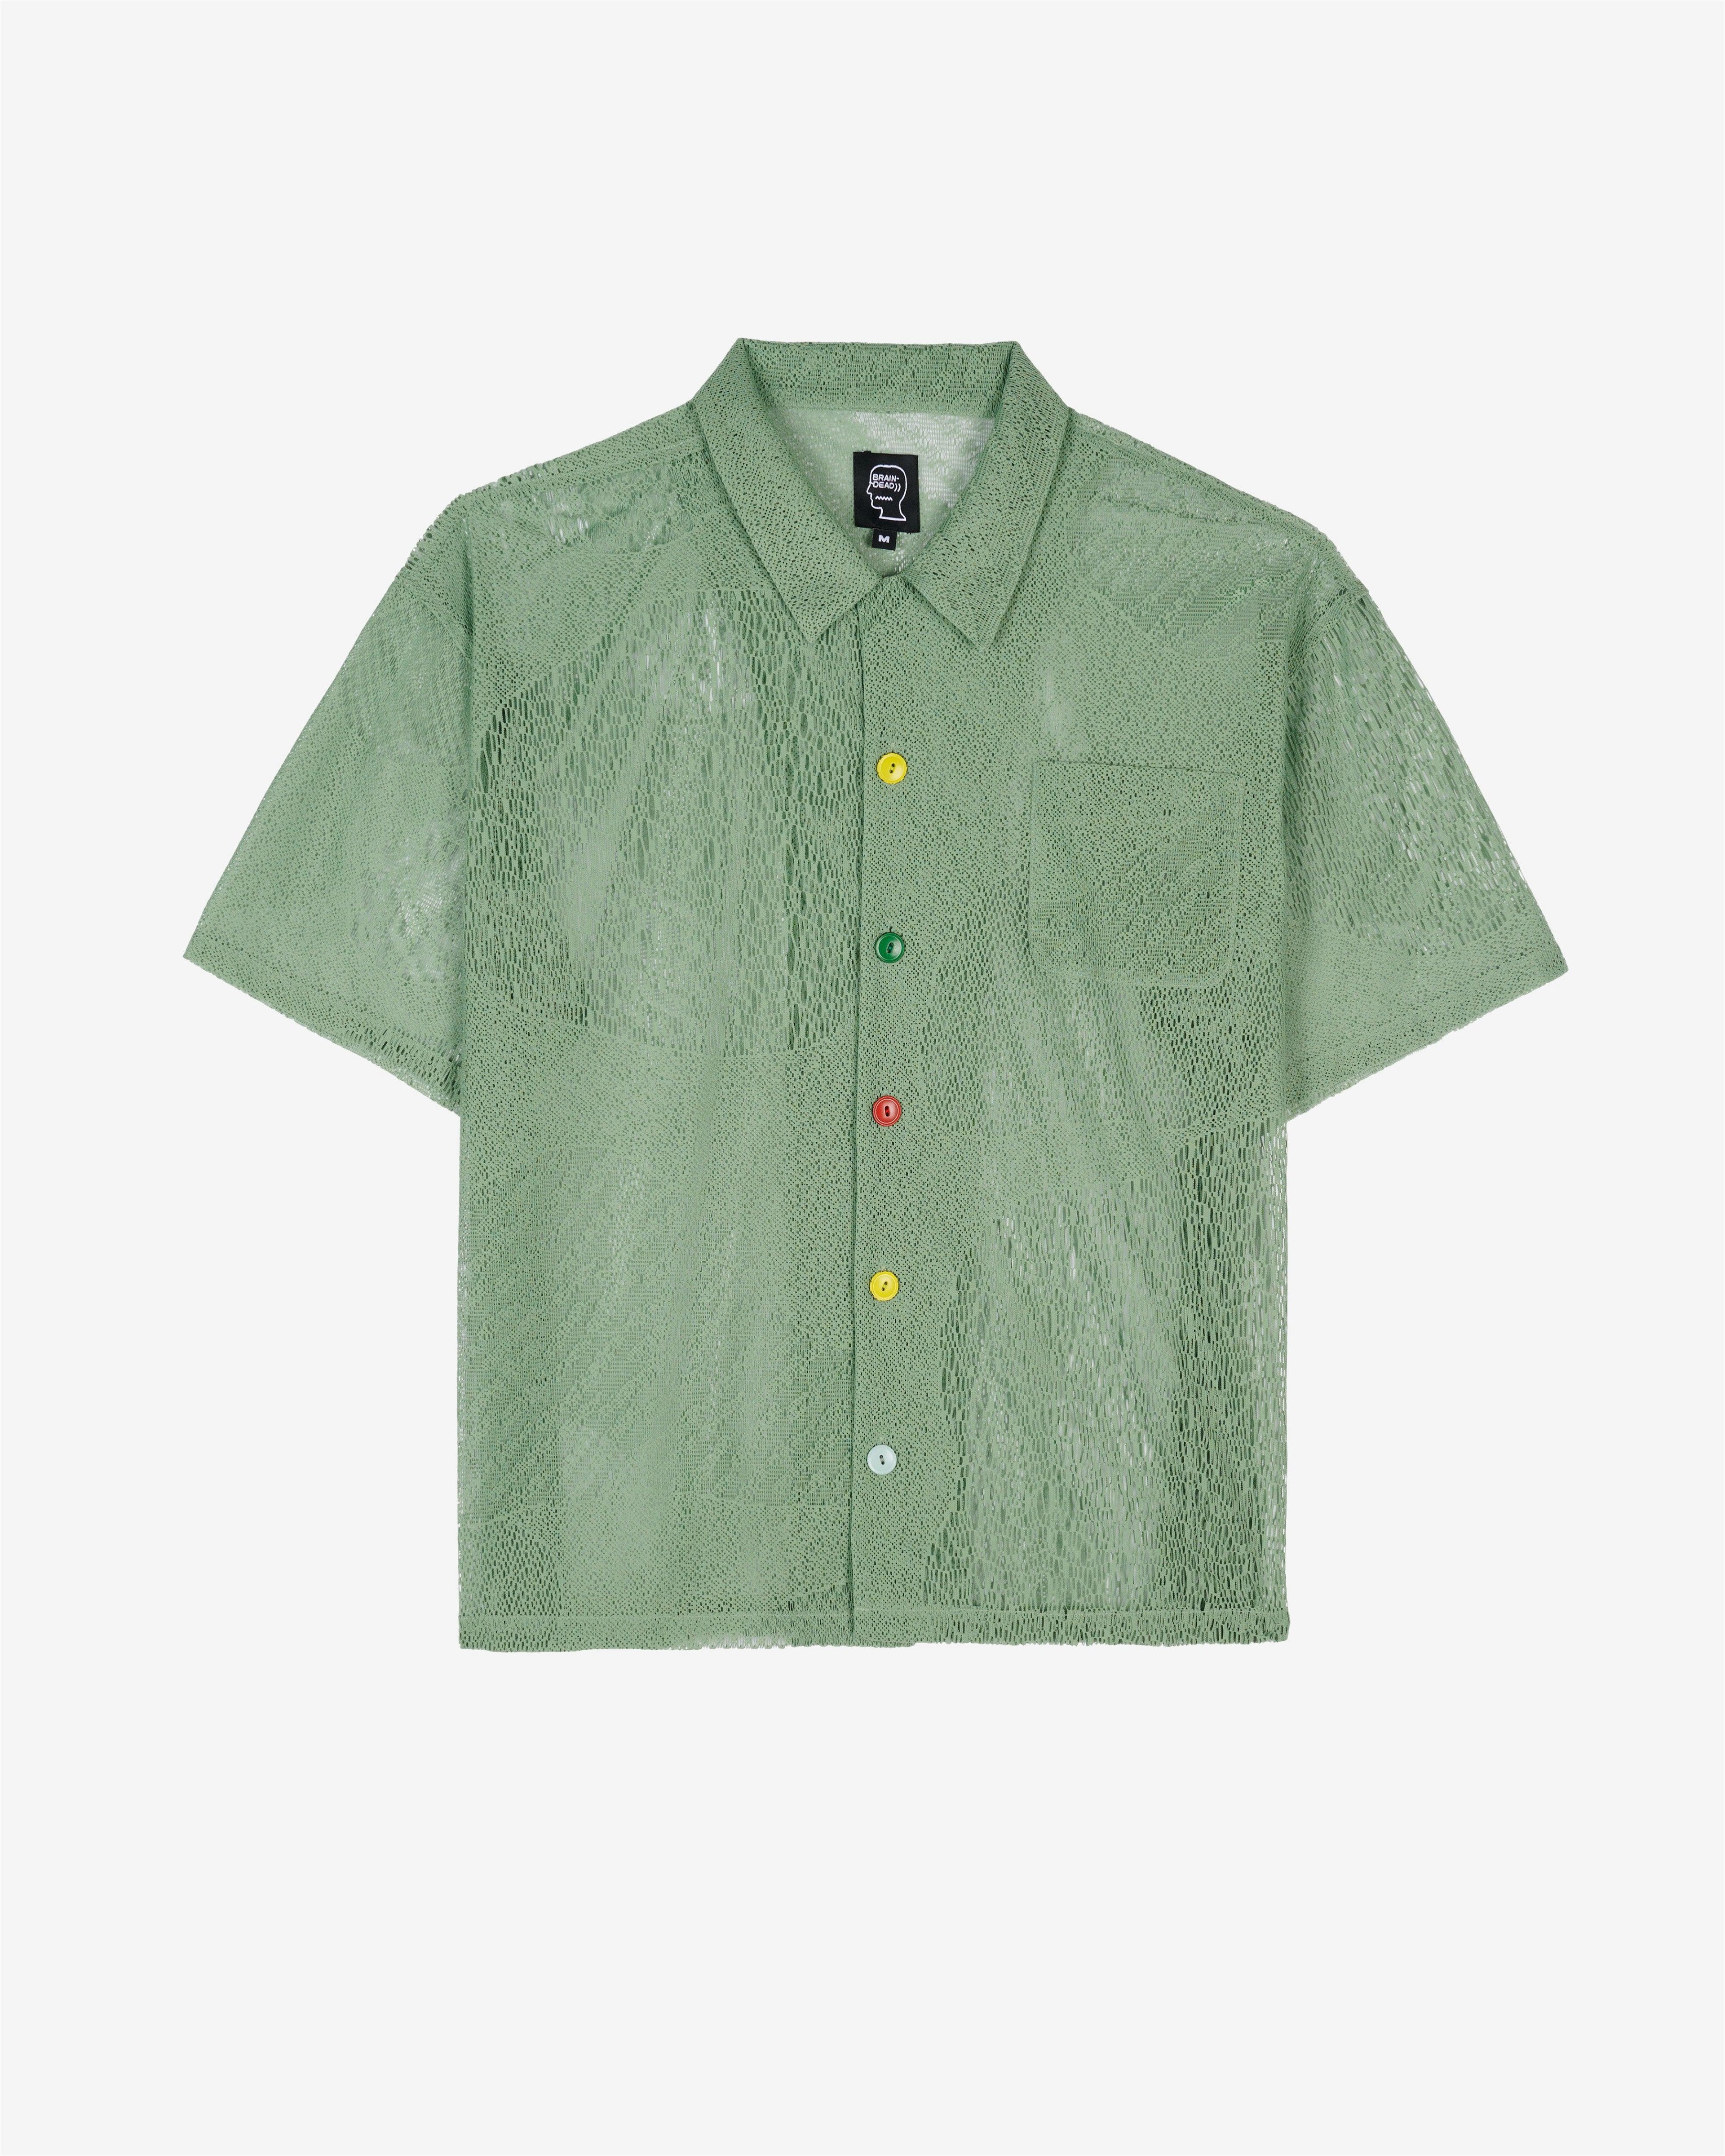 Brain Dead - Men's Engineered Mesh Short Sleeve Shirt - (Green) by BRAIN DEAD